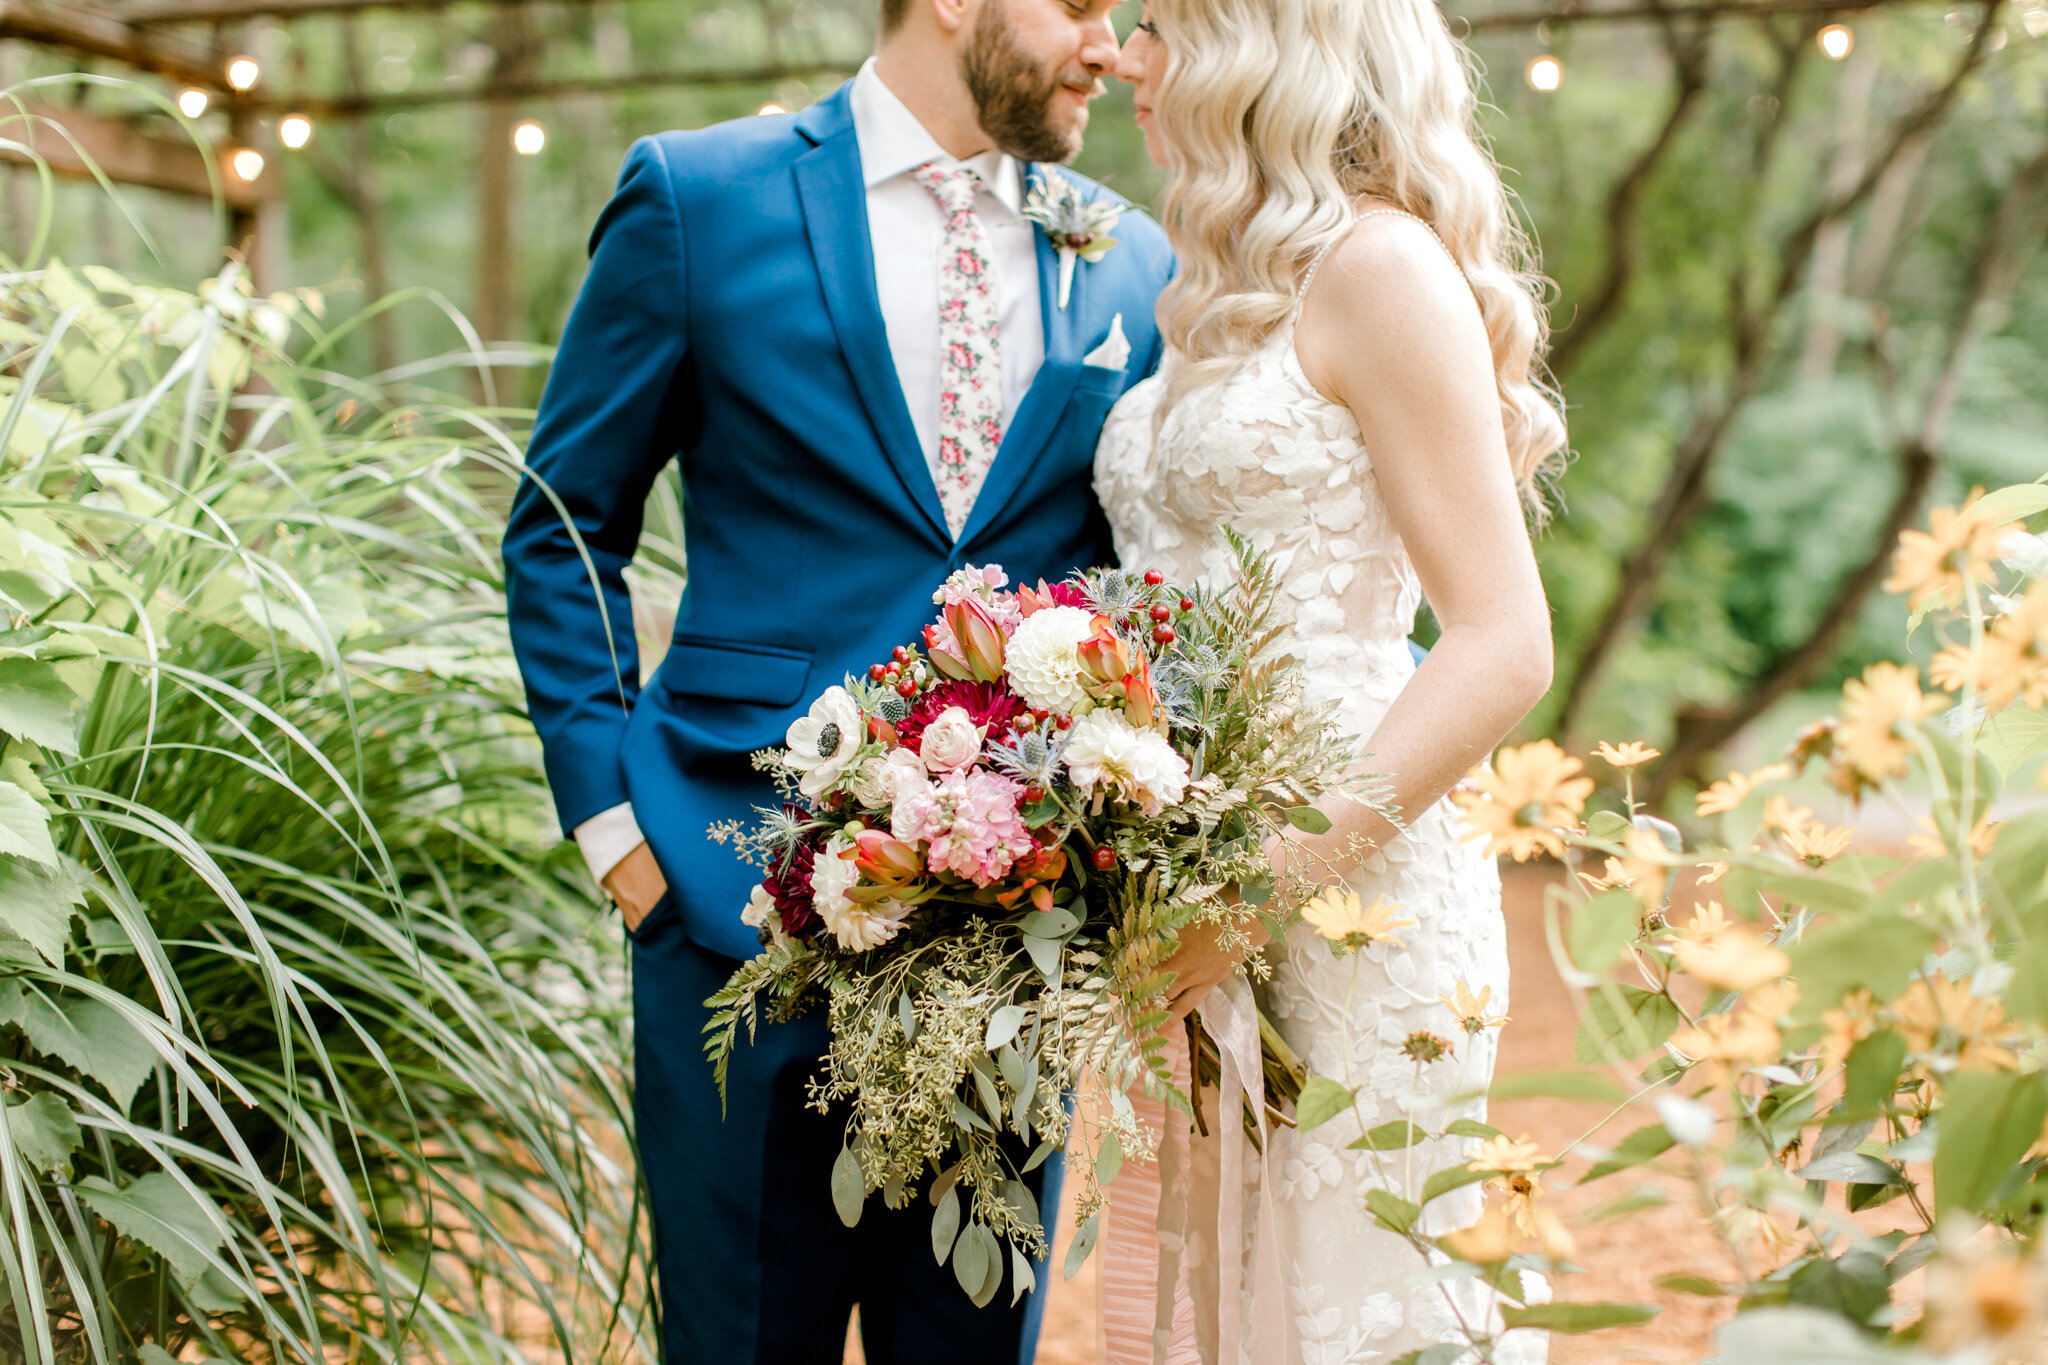 Whimsical Colorful Michigan Wedding at Blue Dress Barn | West Michigan Wedding Photography | Laurenda Marie Photography